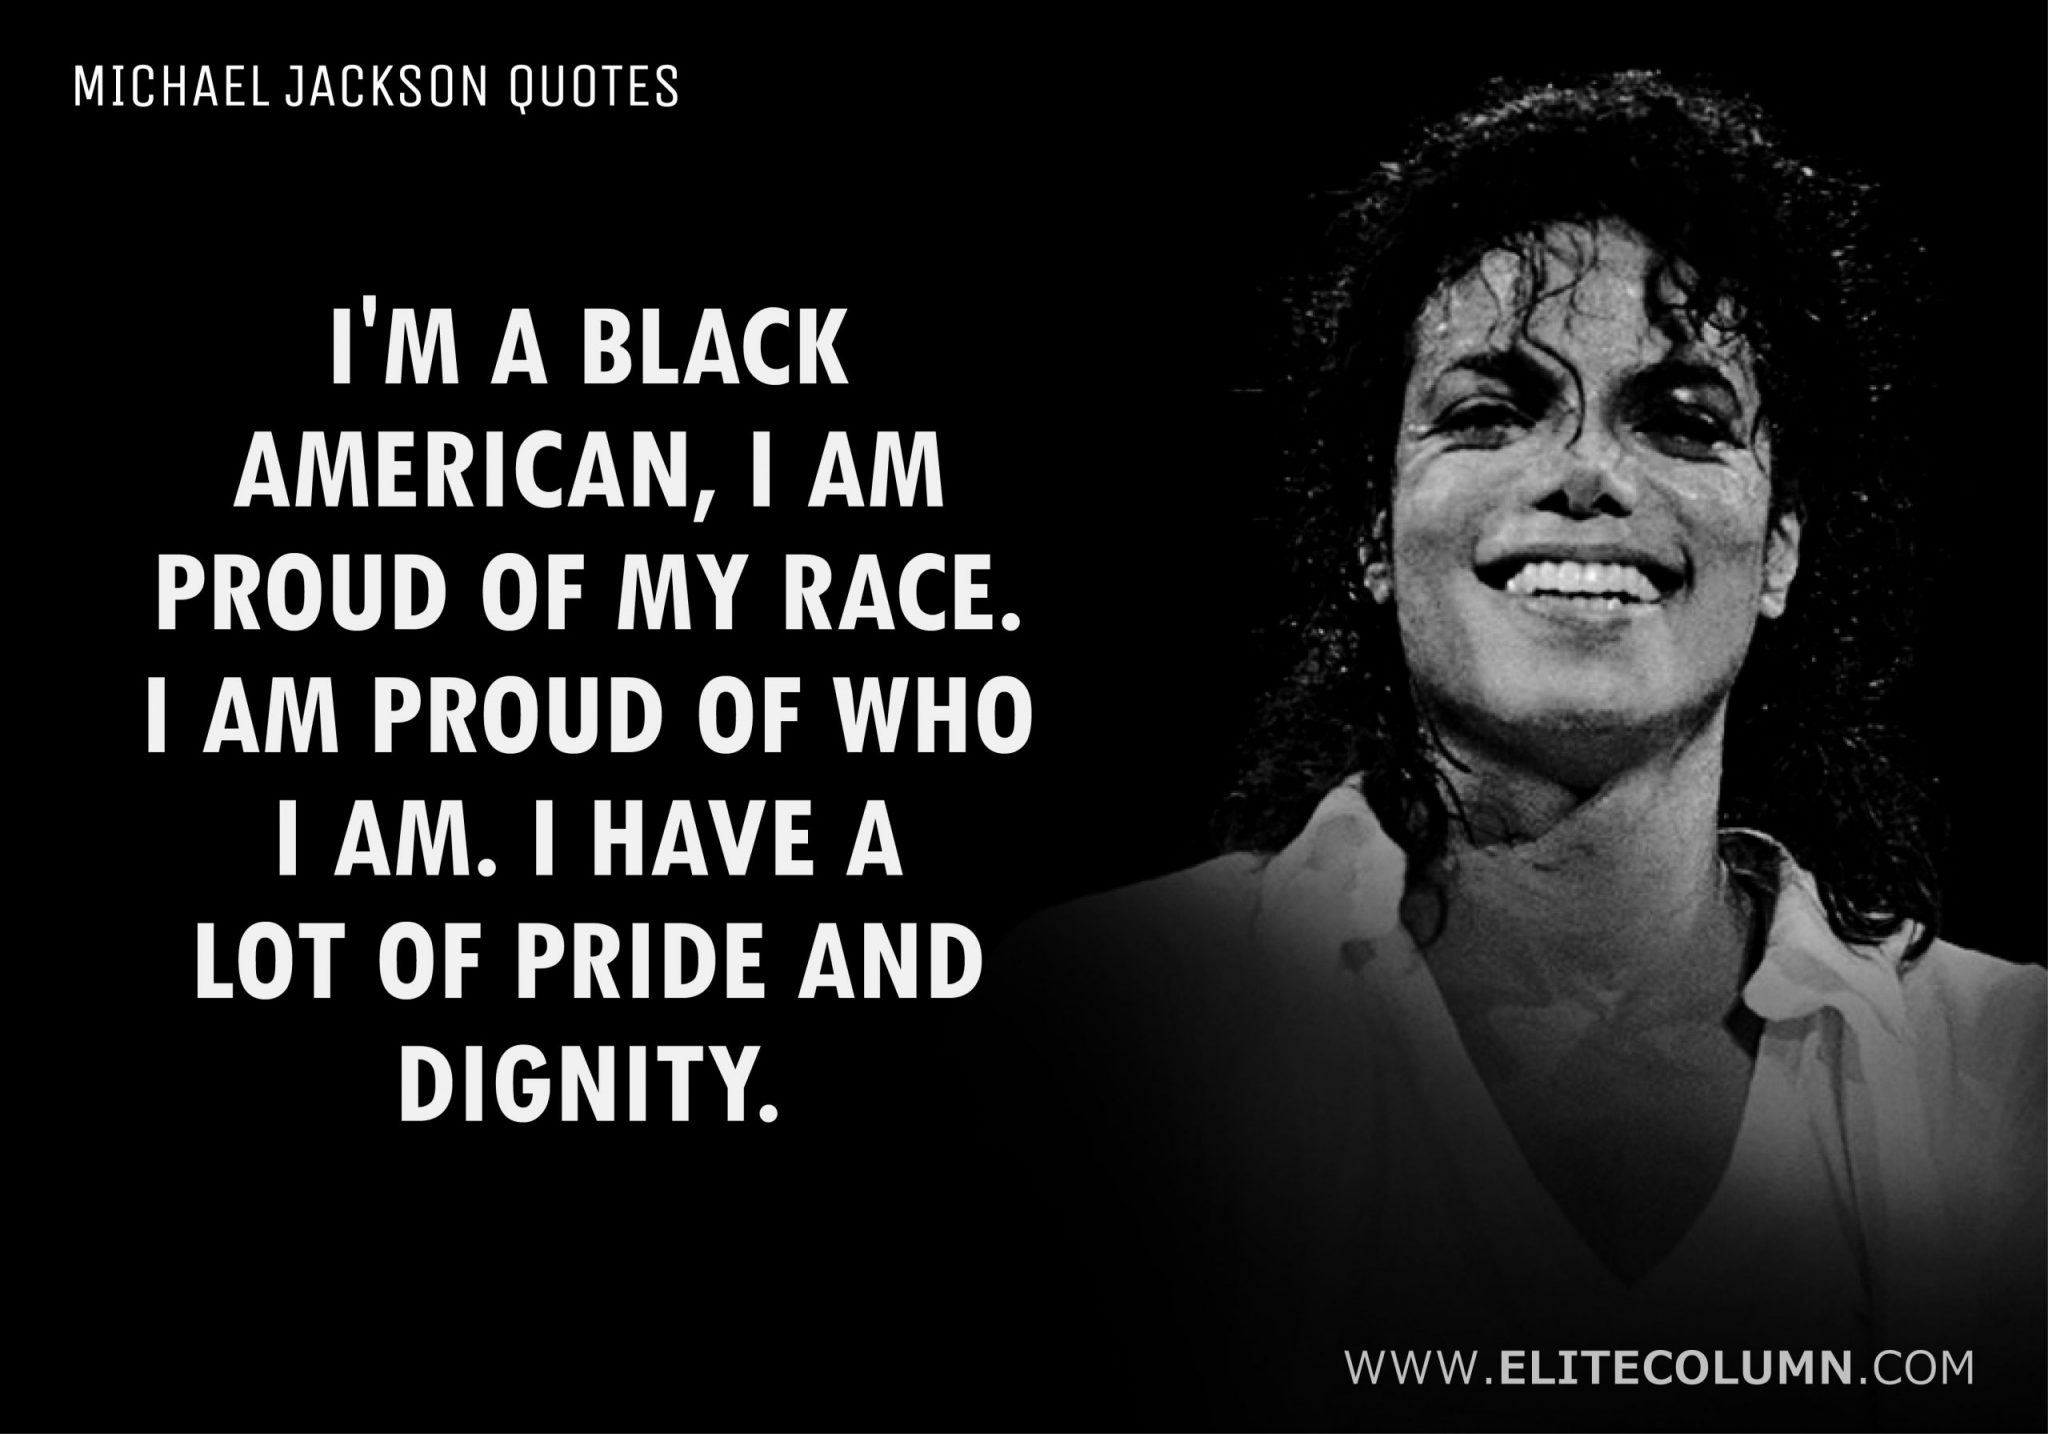 Michael Jackson Quotes (8)